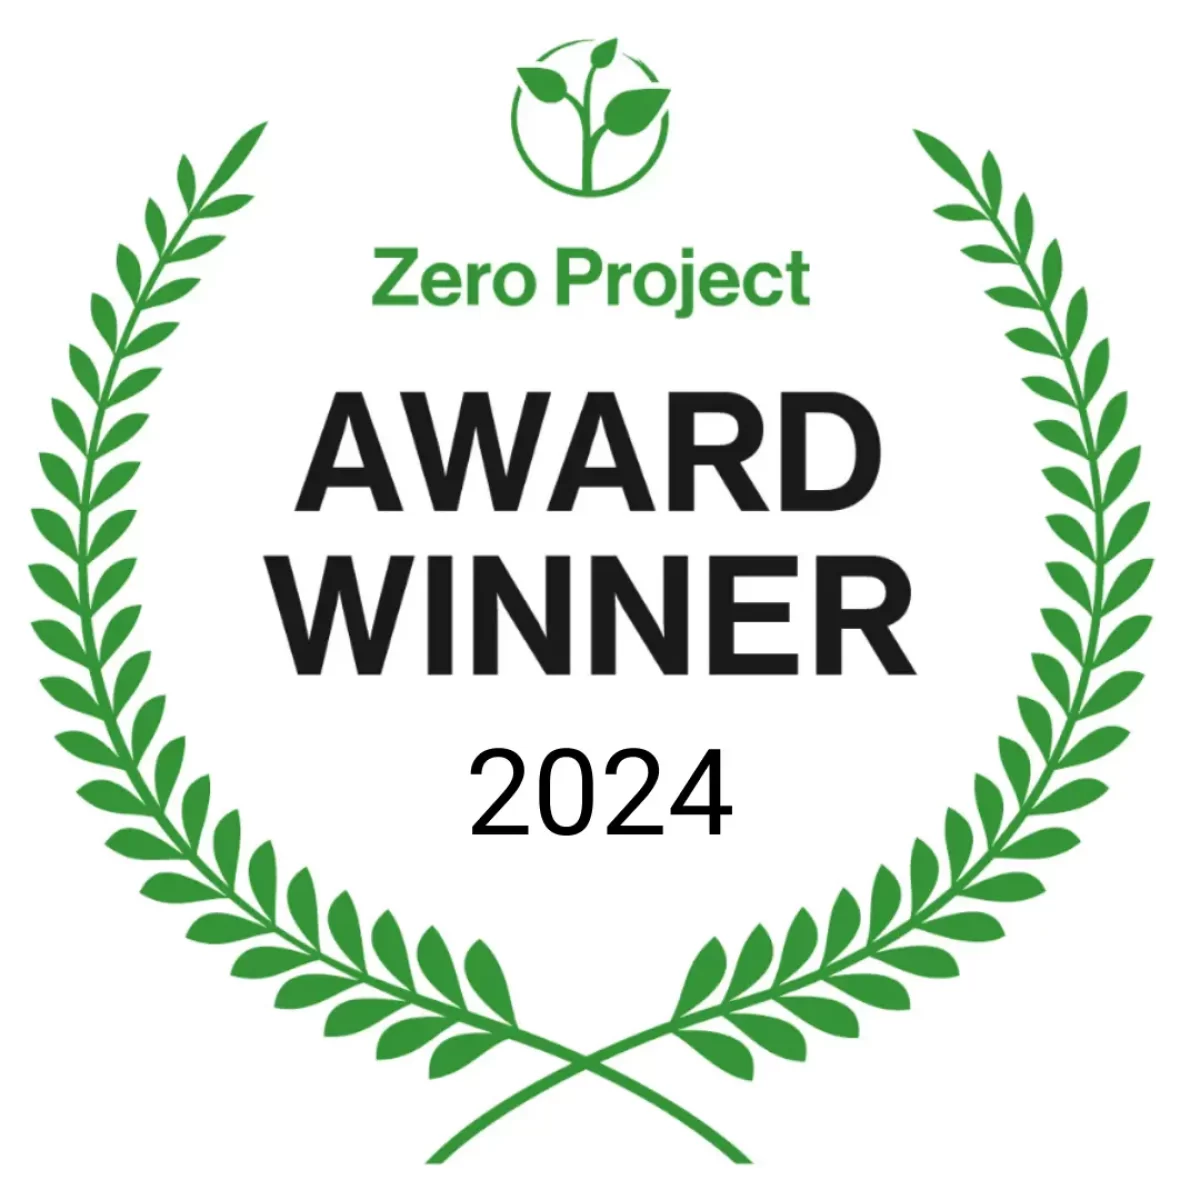 Badge stating Zero Project Award Winner 2024